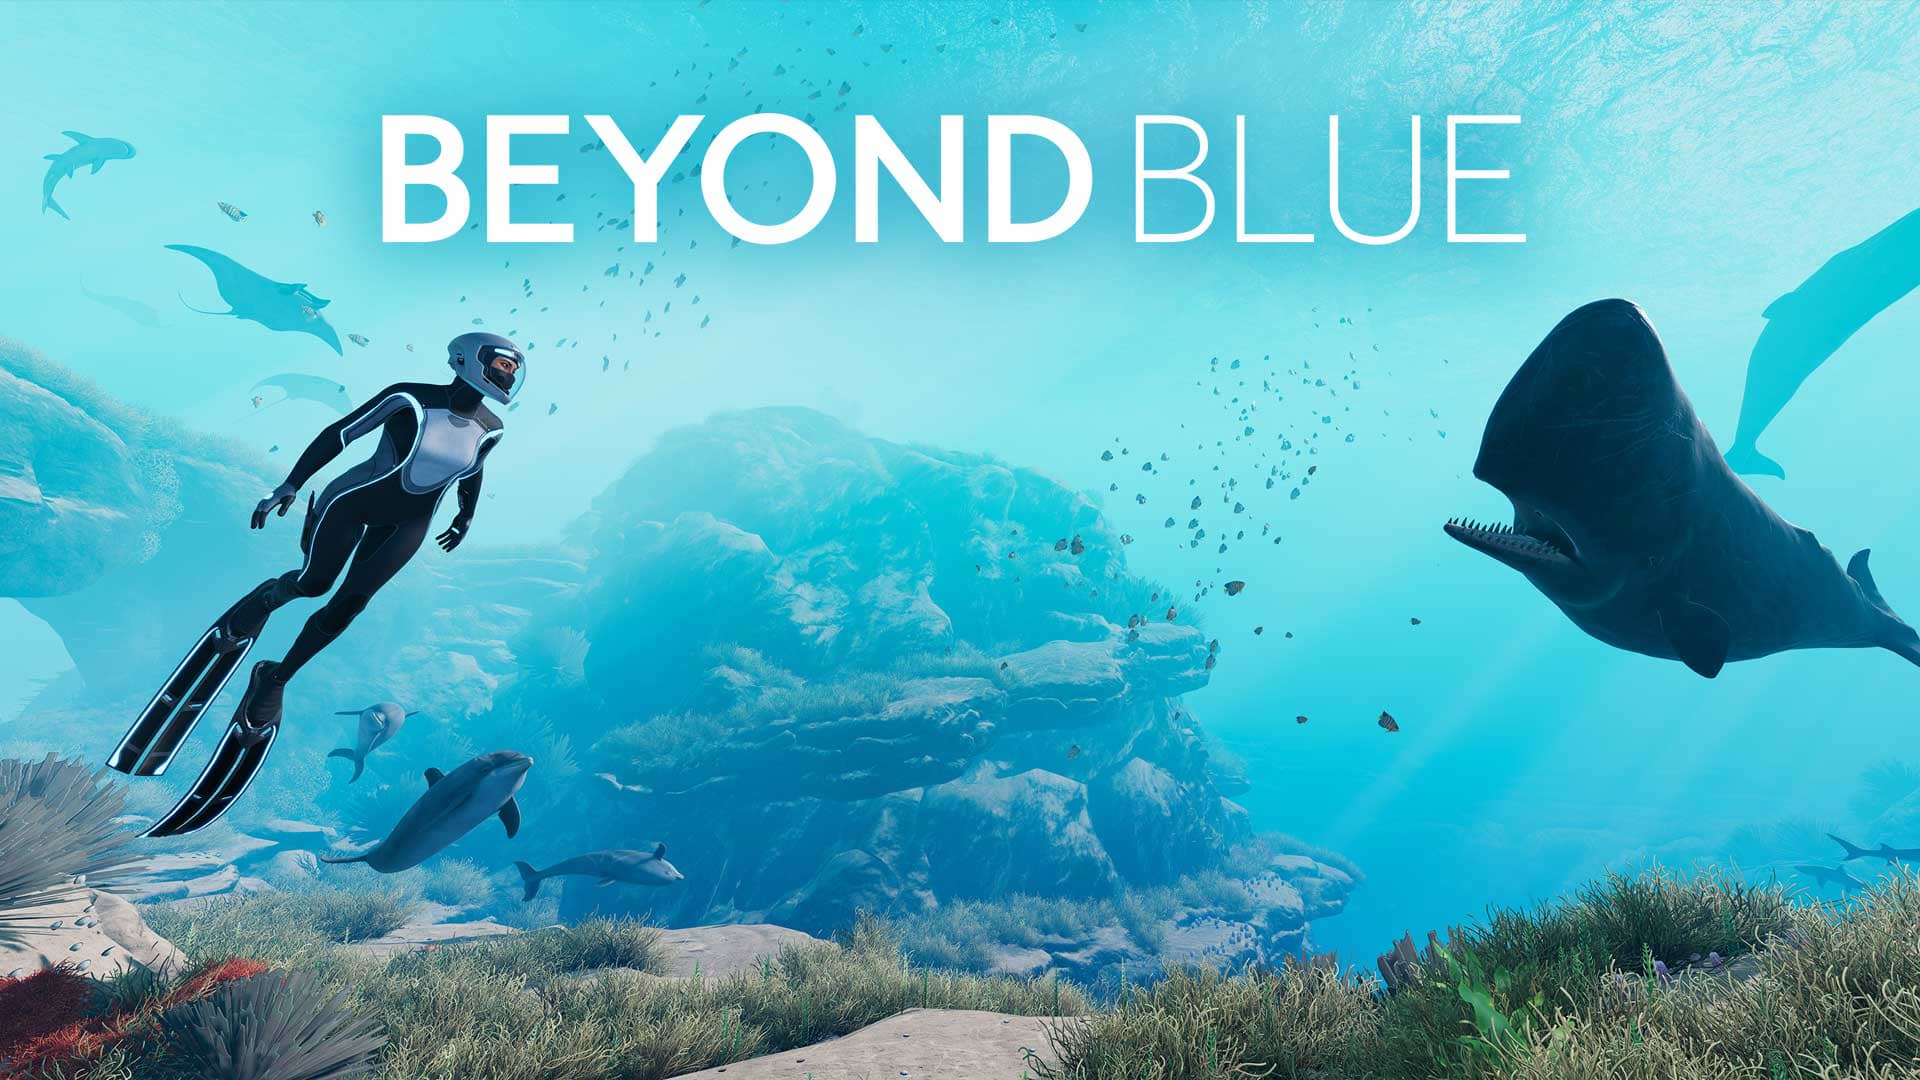 Beyond Blue - Gameplay Trailer on Vimeo